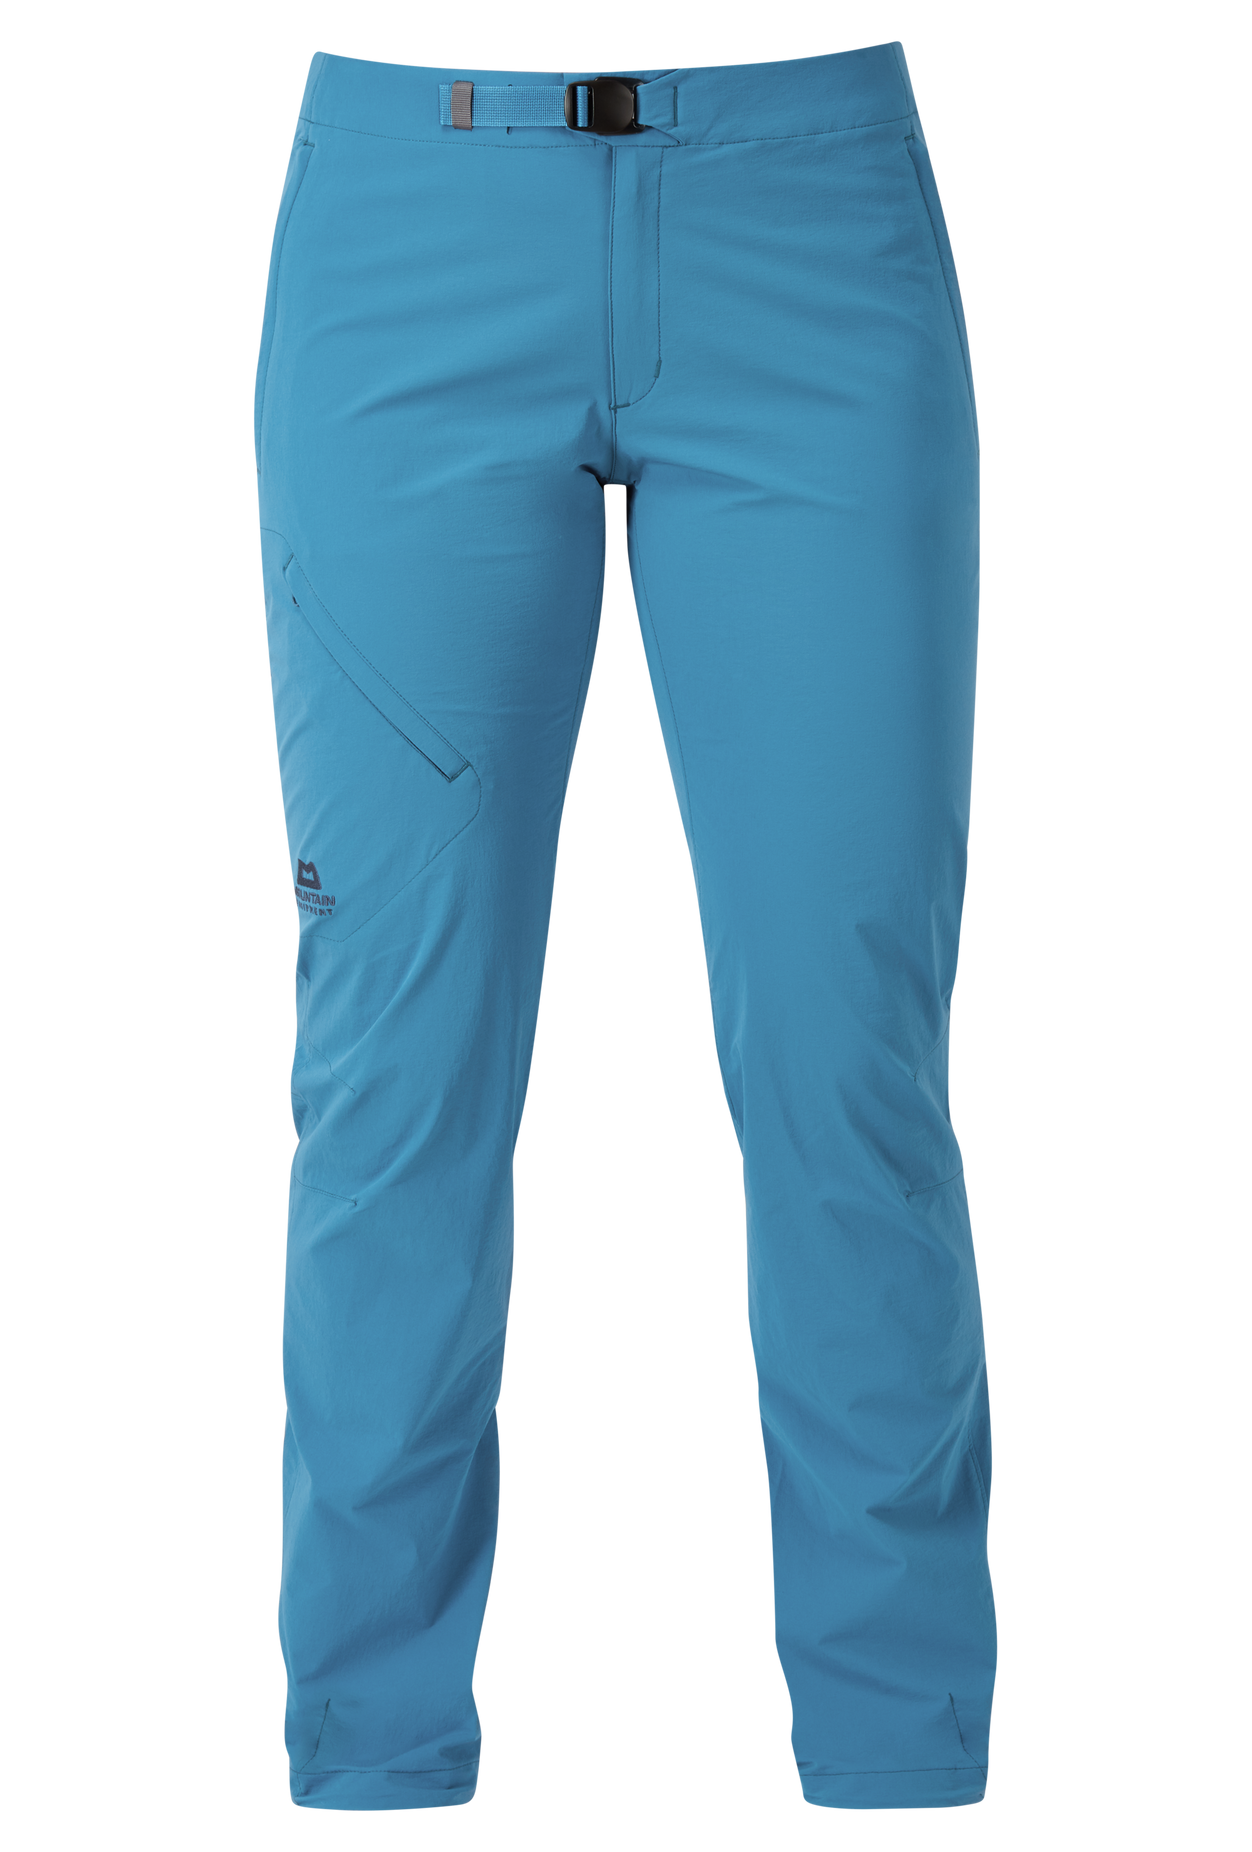 Mountain Equipment dámské softshellové kalhoty Comici Wmns Pant - prodloužené Barva: Alto Blue, Velikost: 16/XL